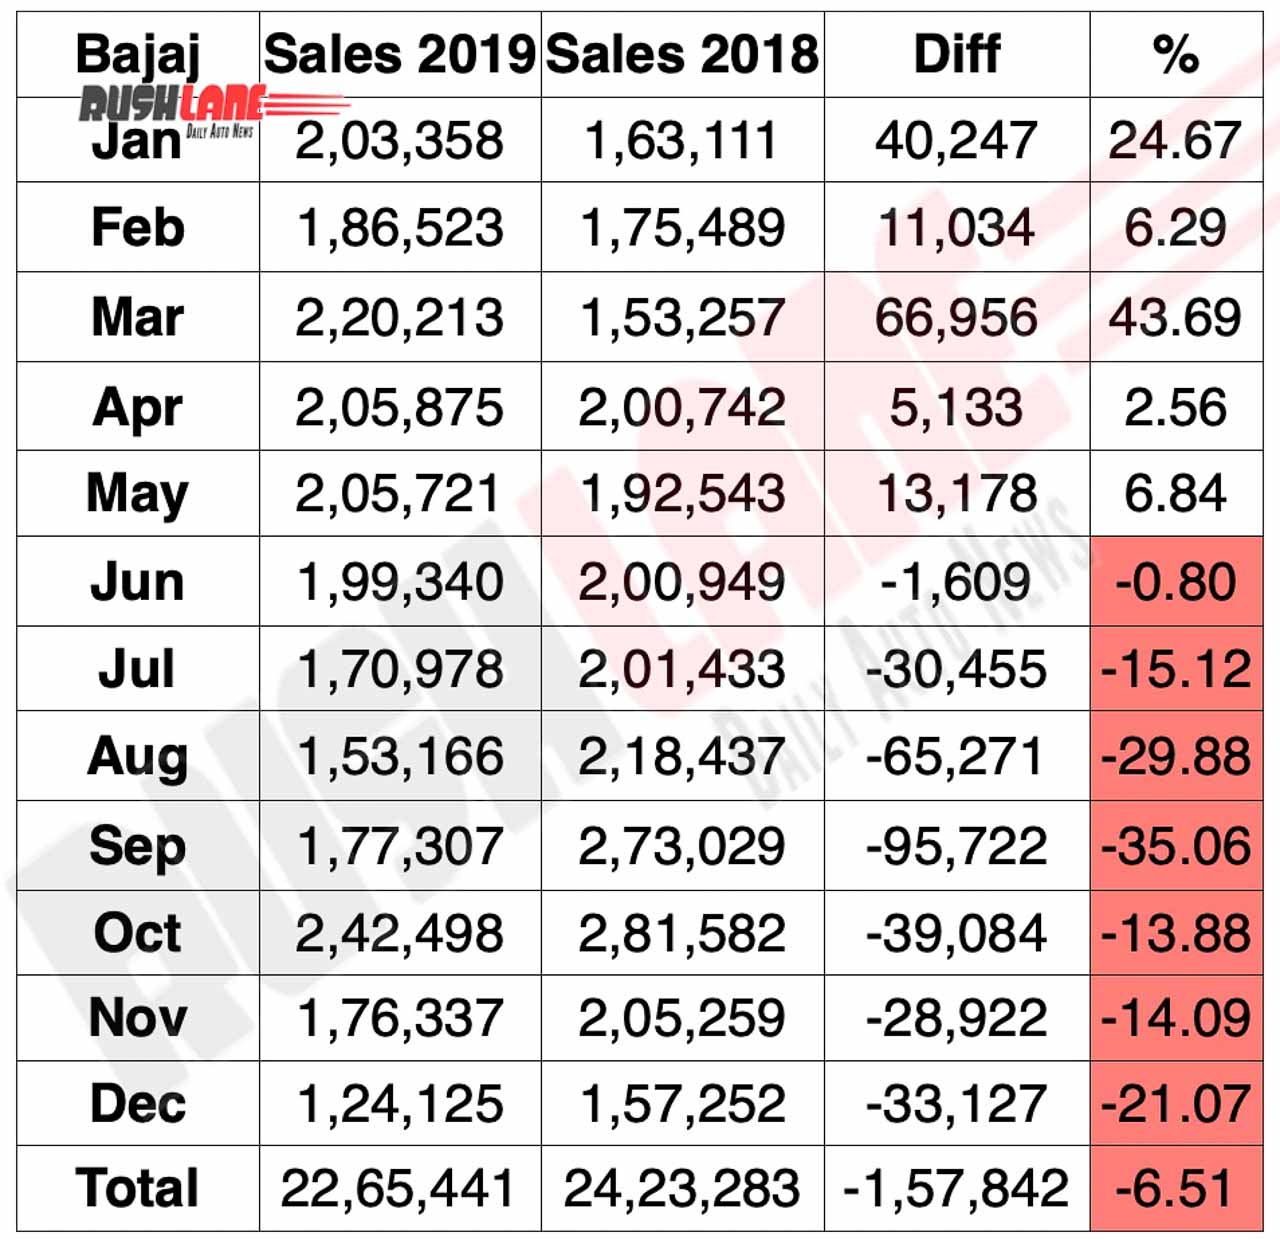 Bajaj sales report for CY 2019